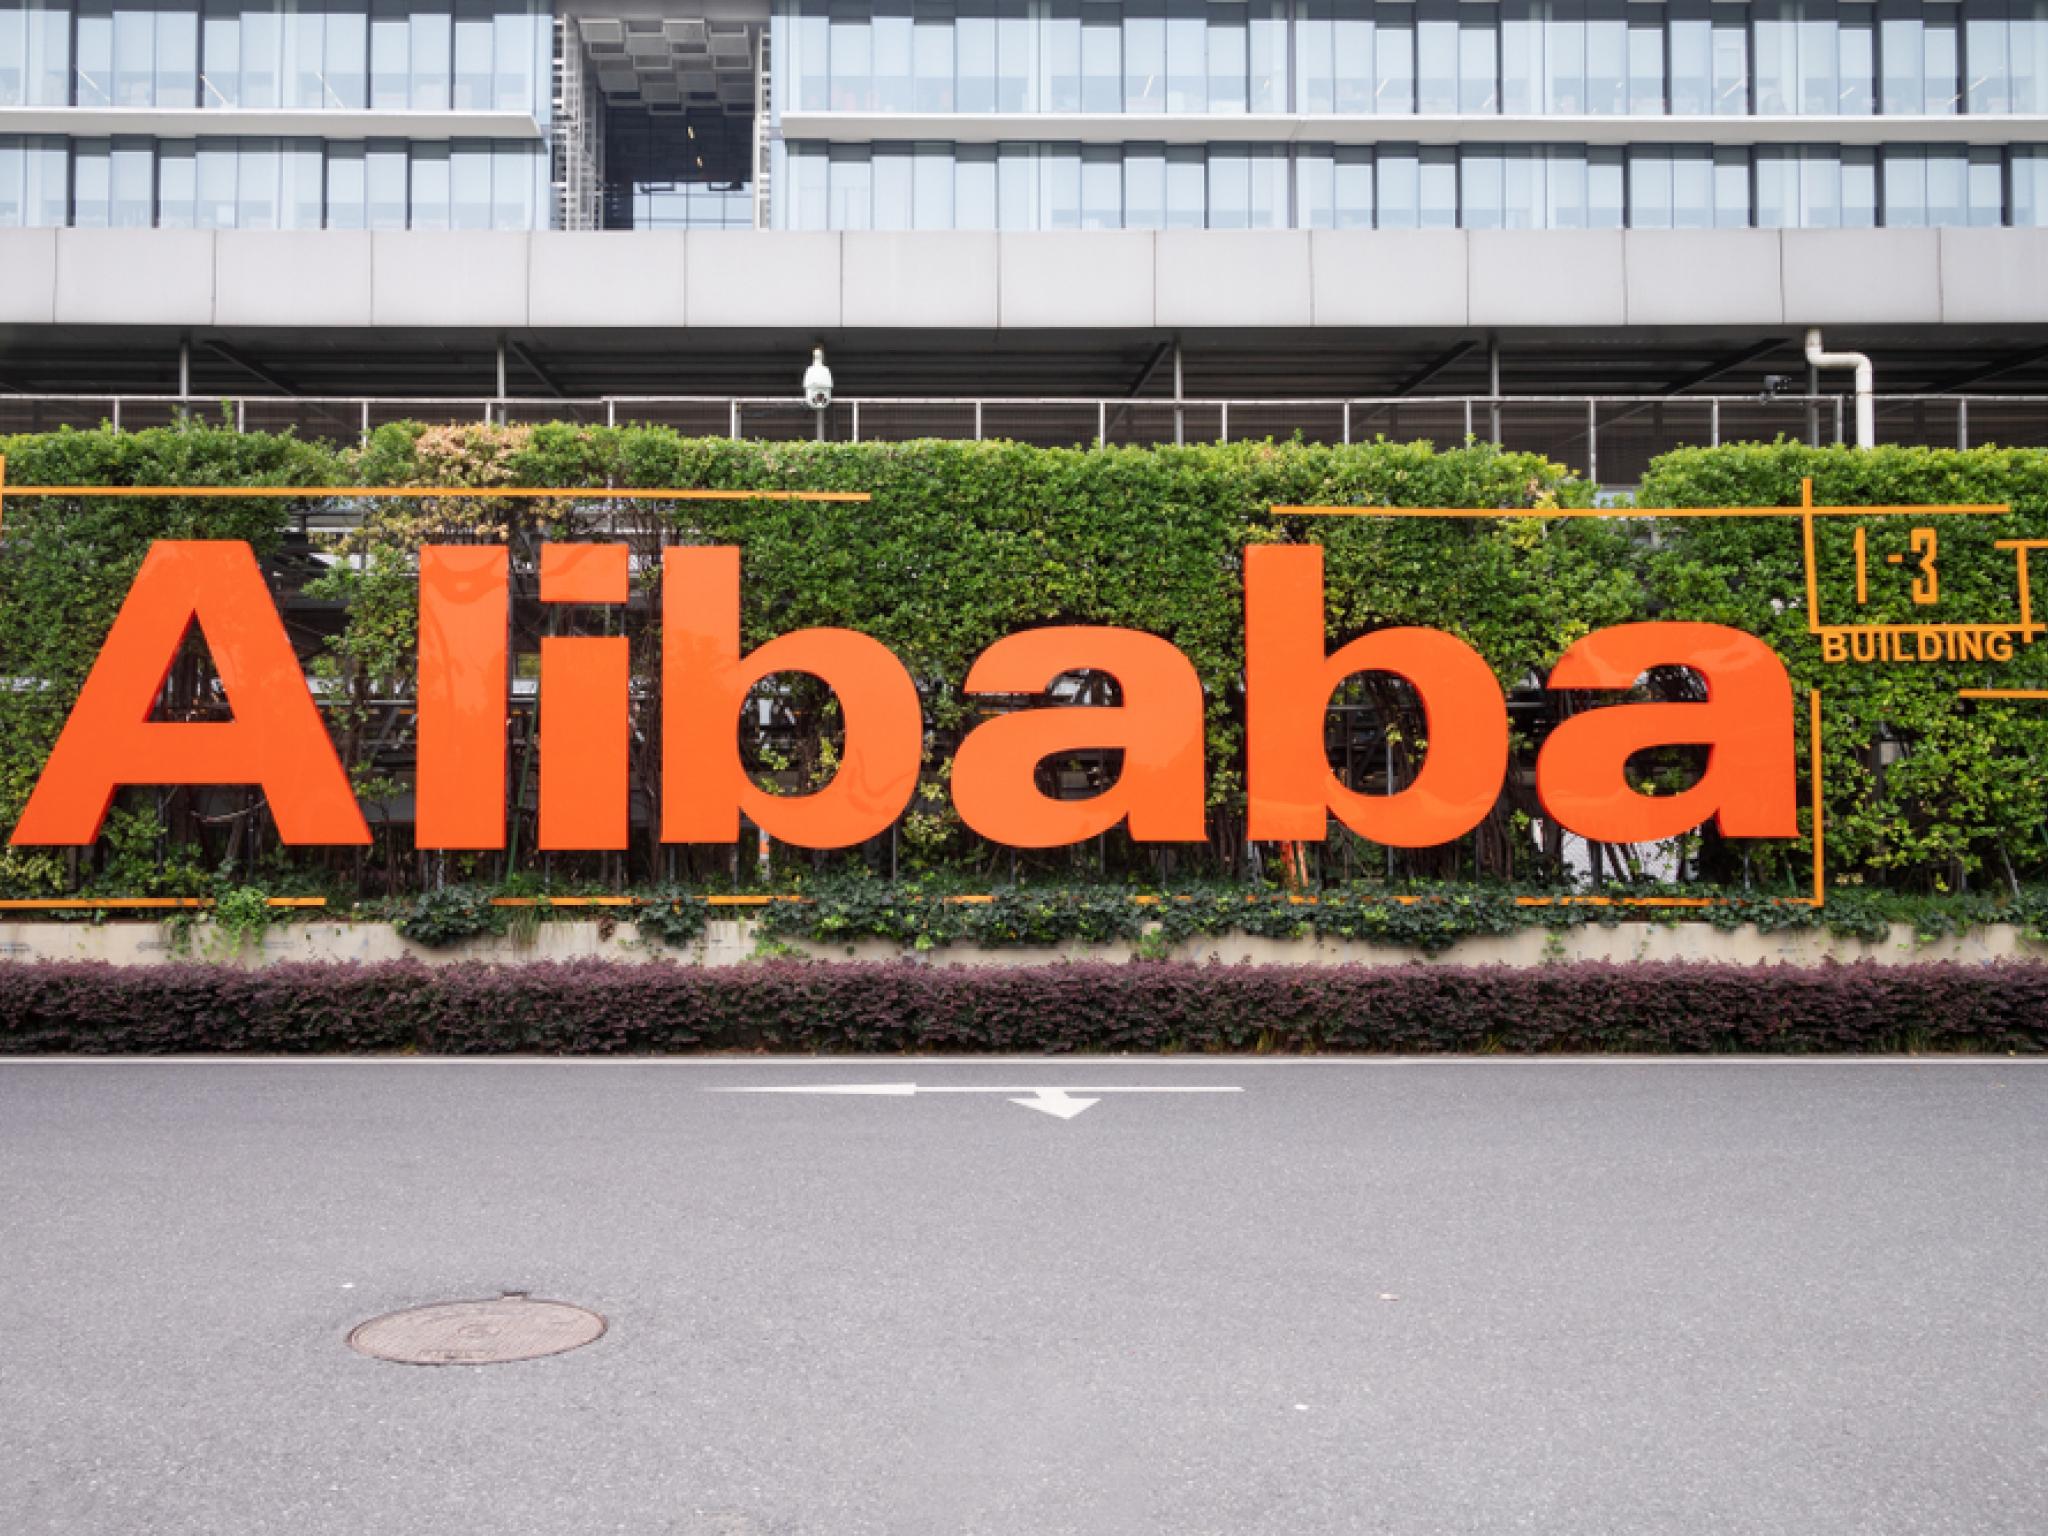  alibaba-shares-tumble-wednesday---heres-why 